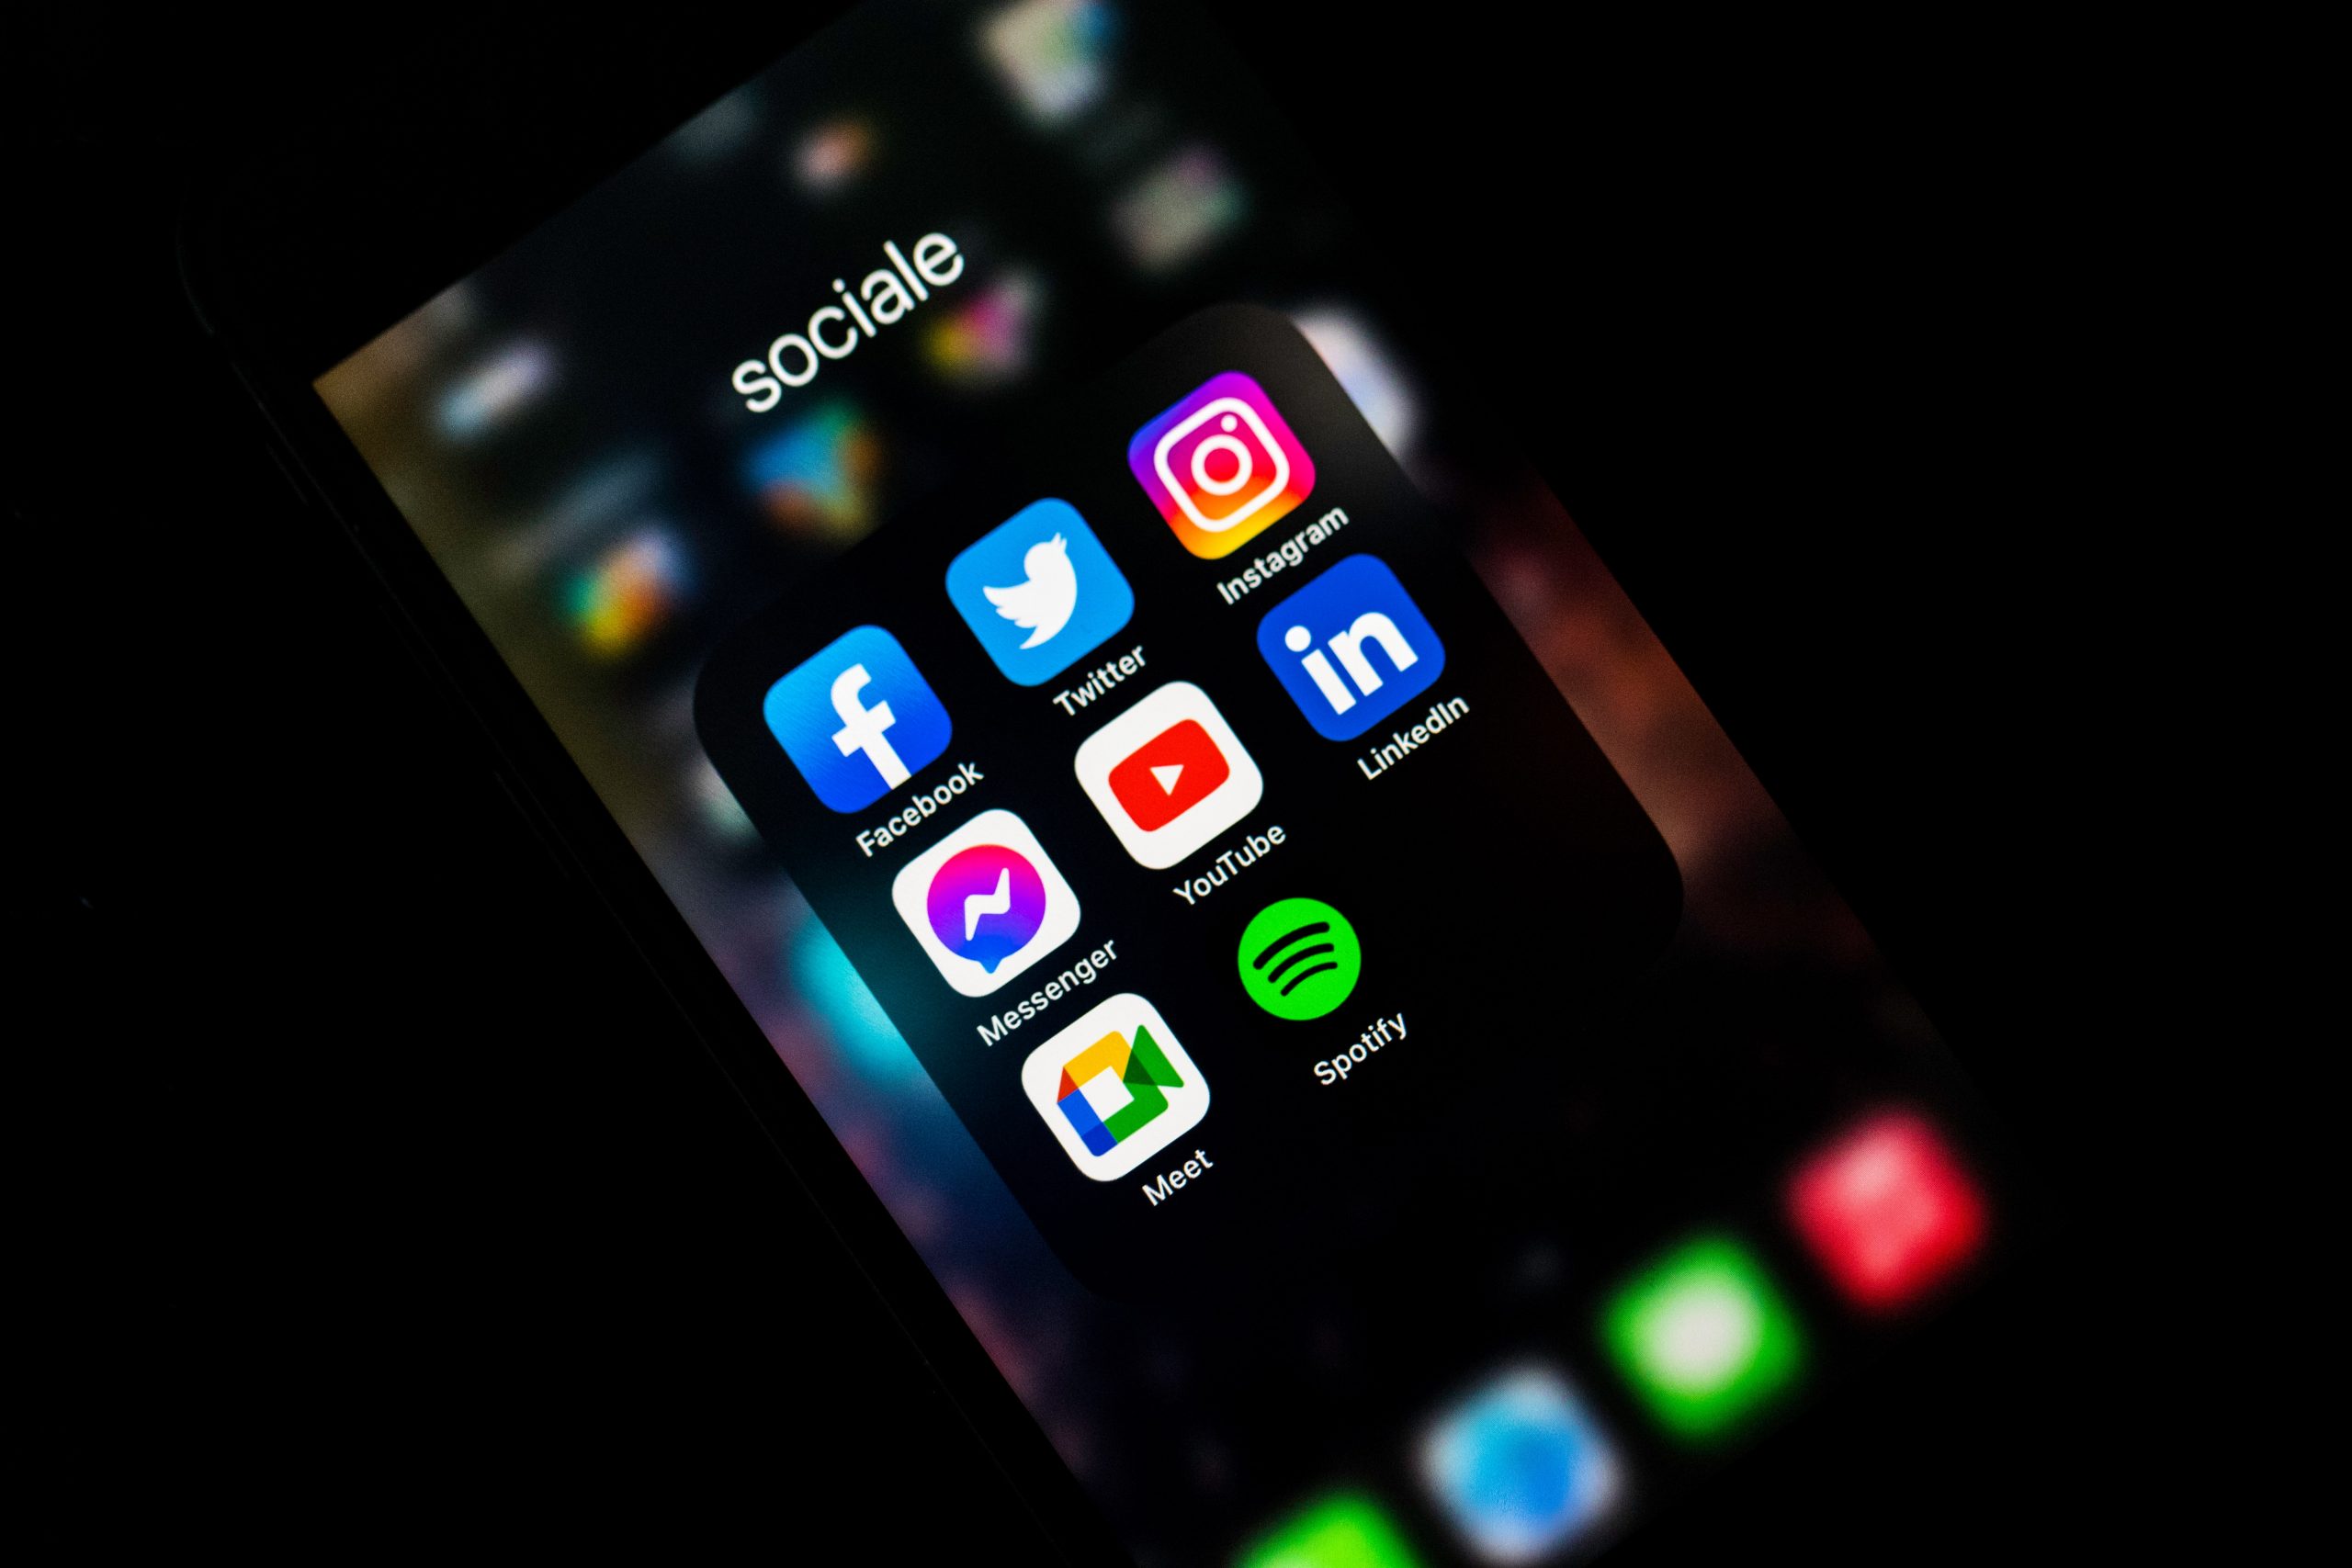 SOCIAL media icons on phone